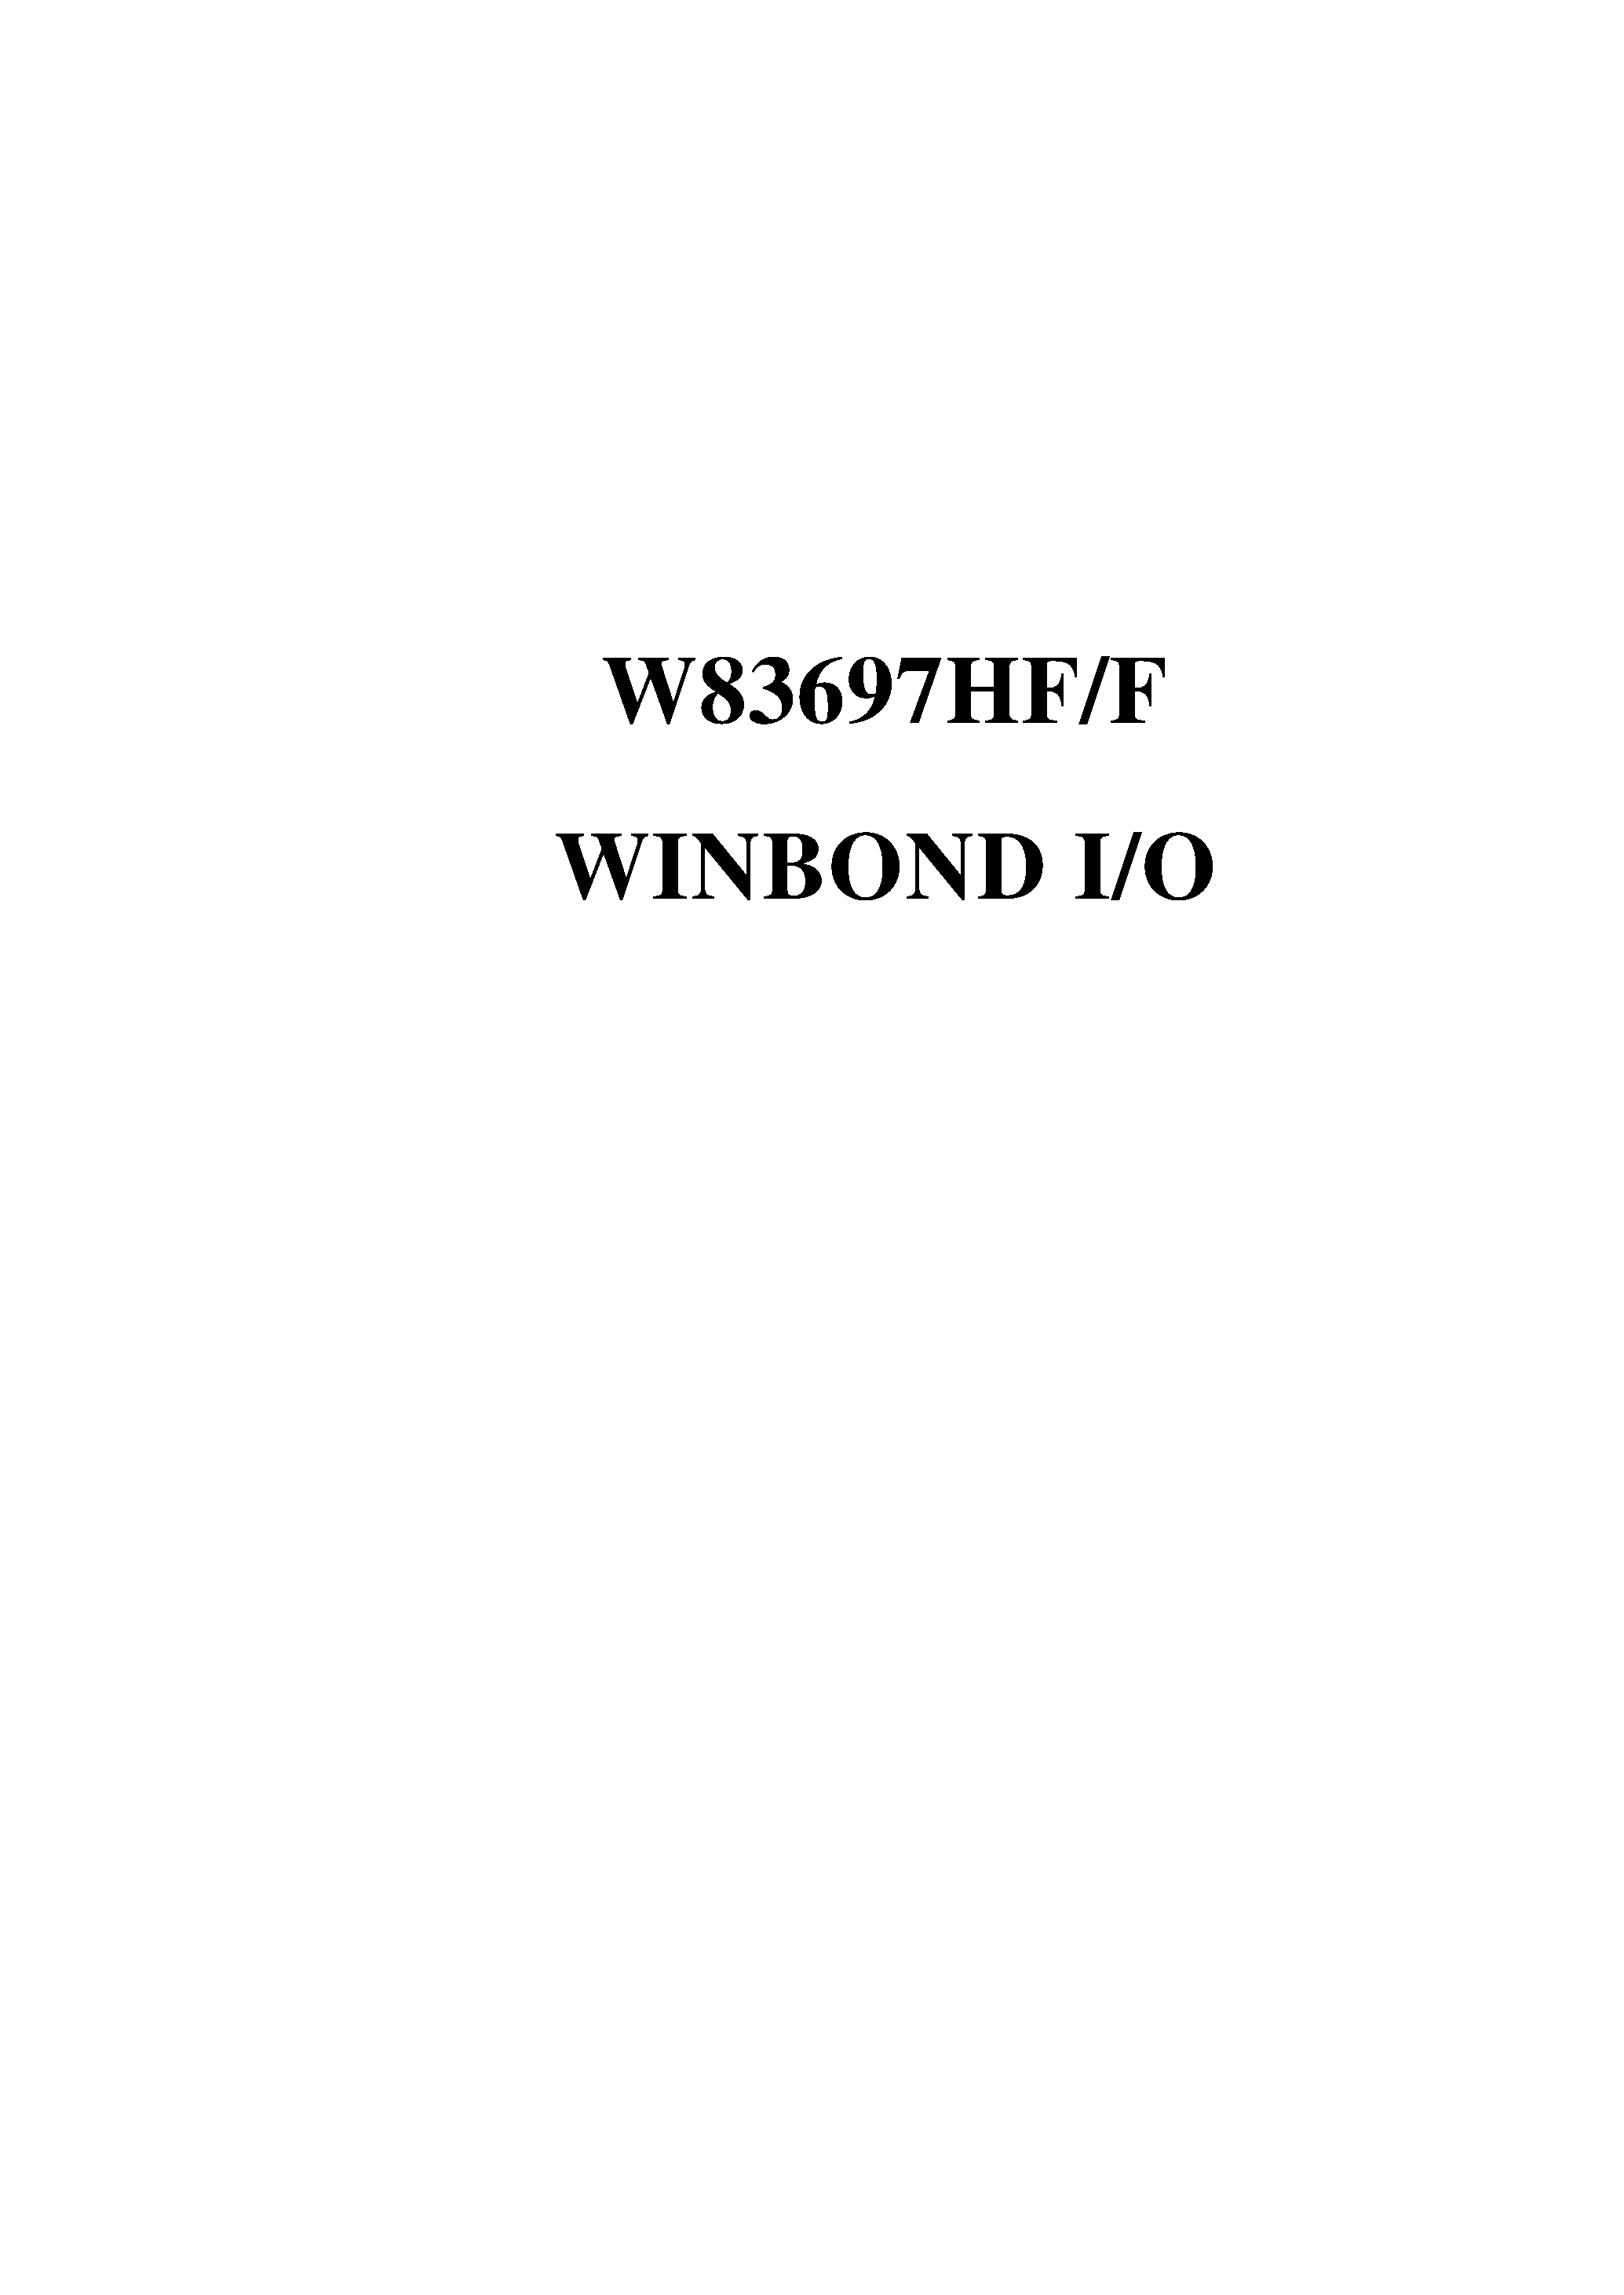 Datasheet W83697HF - WINBOND I/O page 1